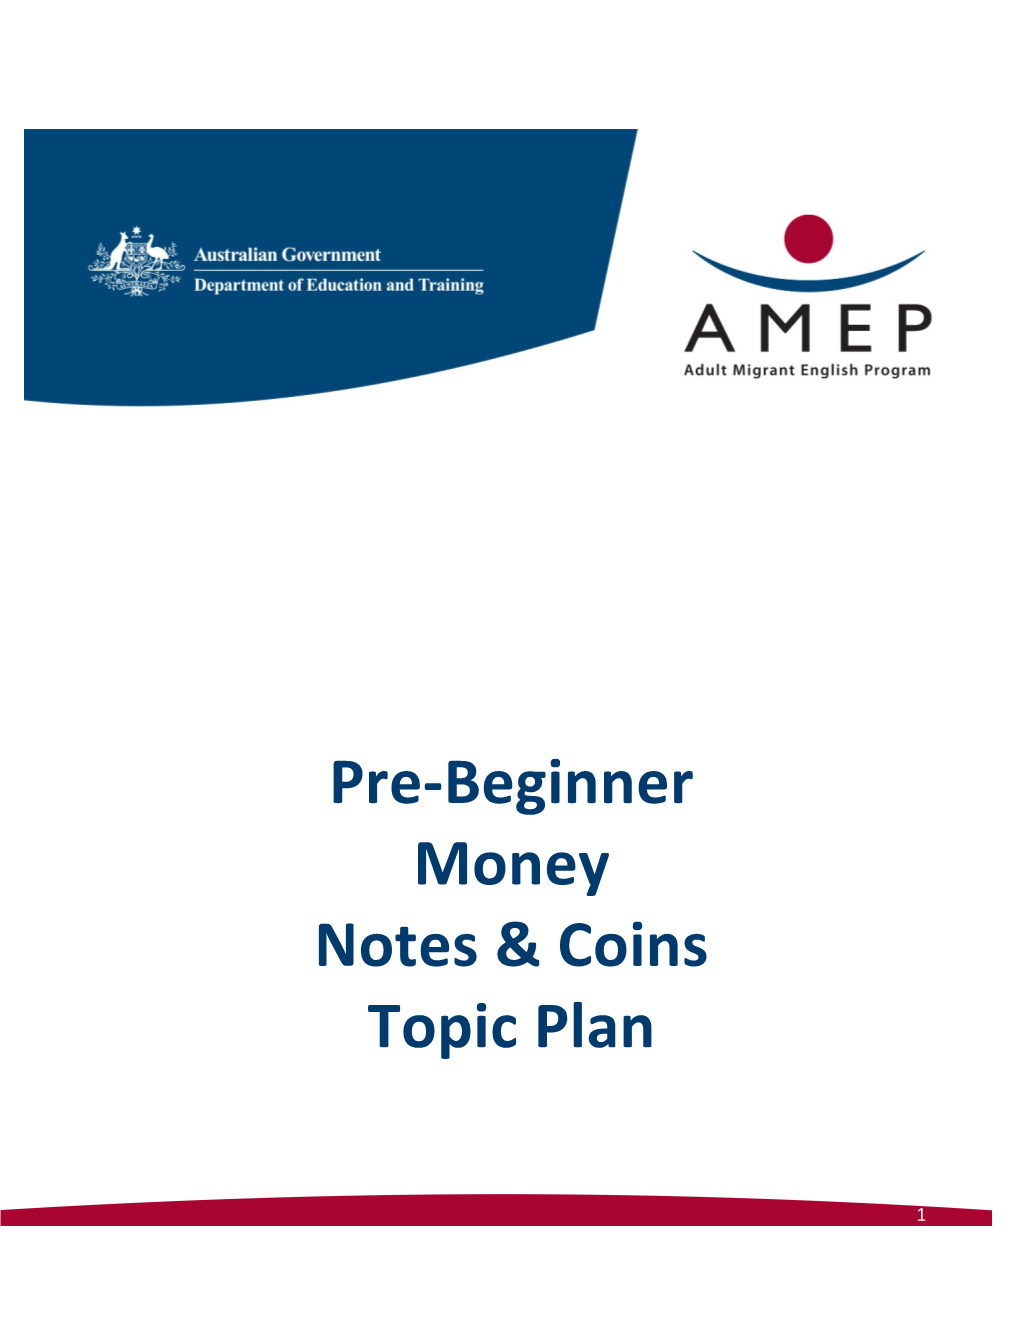 Pre-Beginner Money Notes & Coins Topic Plan